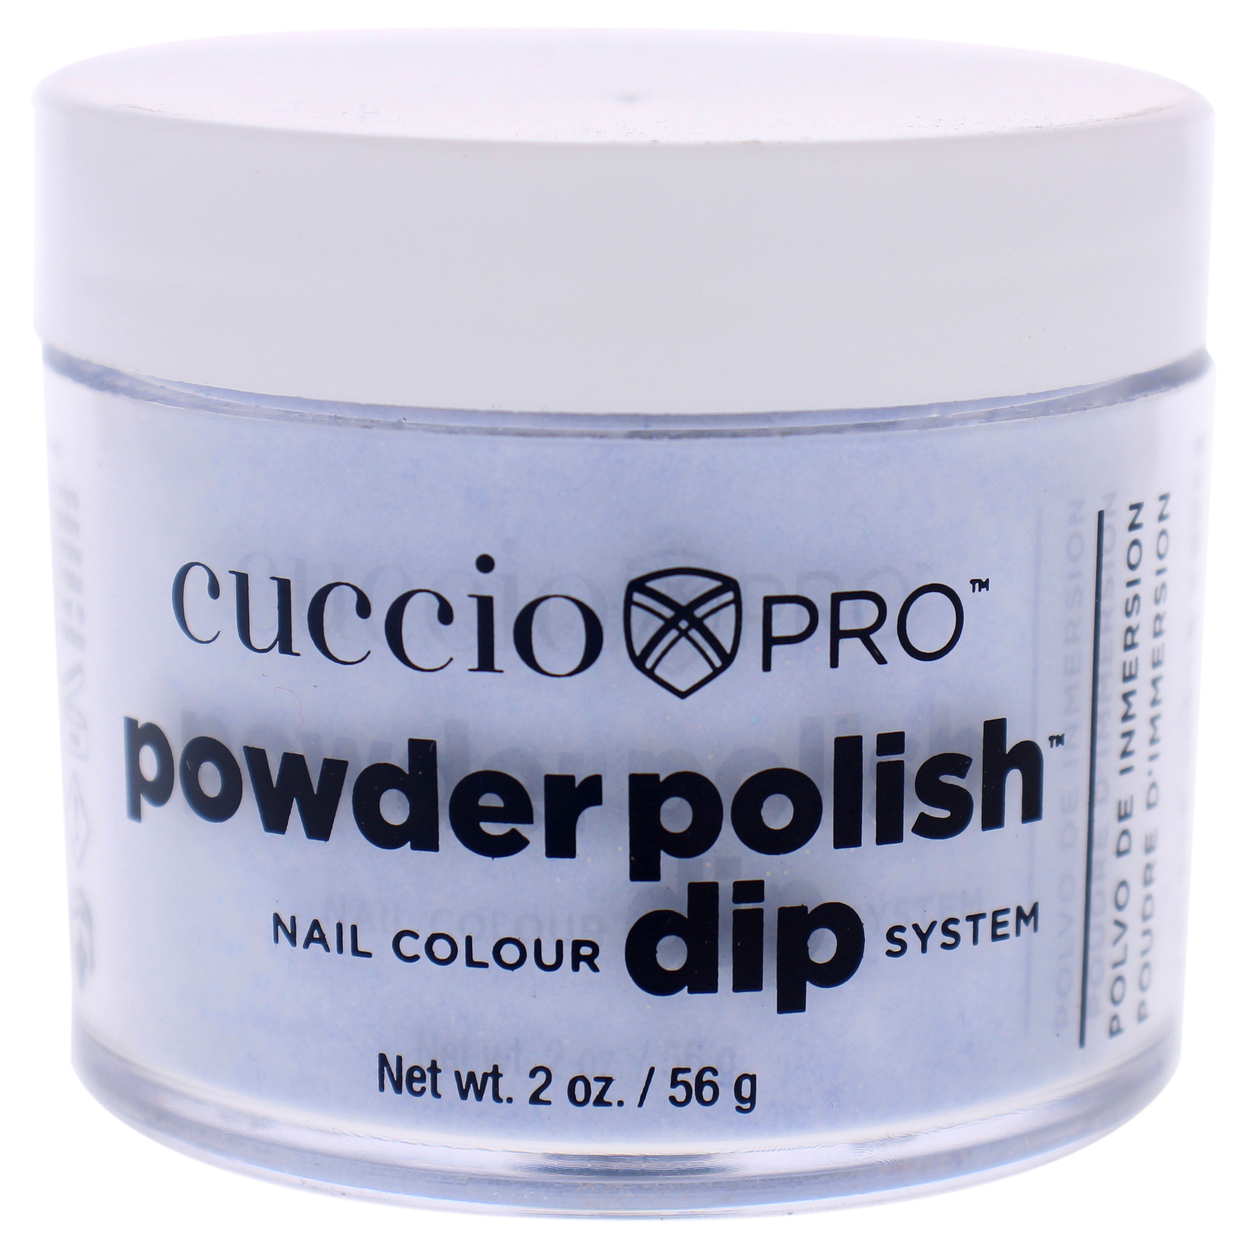 Cuccio Colour Pro Powder Polish Nail Colour Dip System - Baby Blue Glitter Nail Powder 1.6 Oz